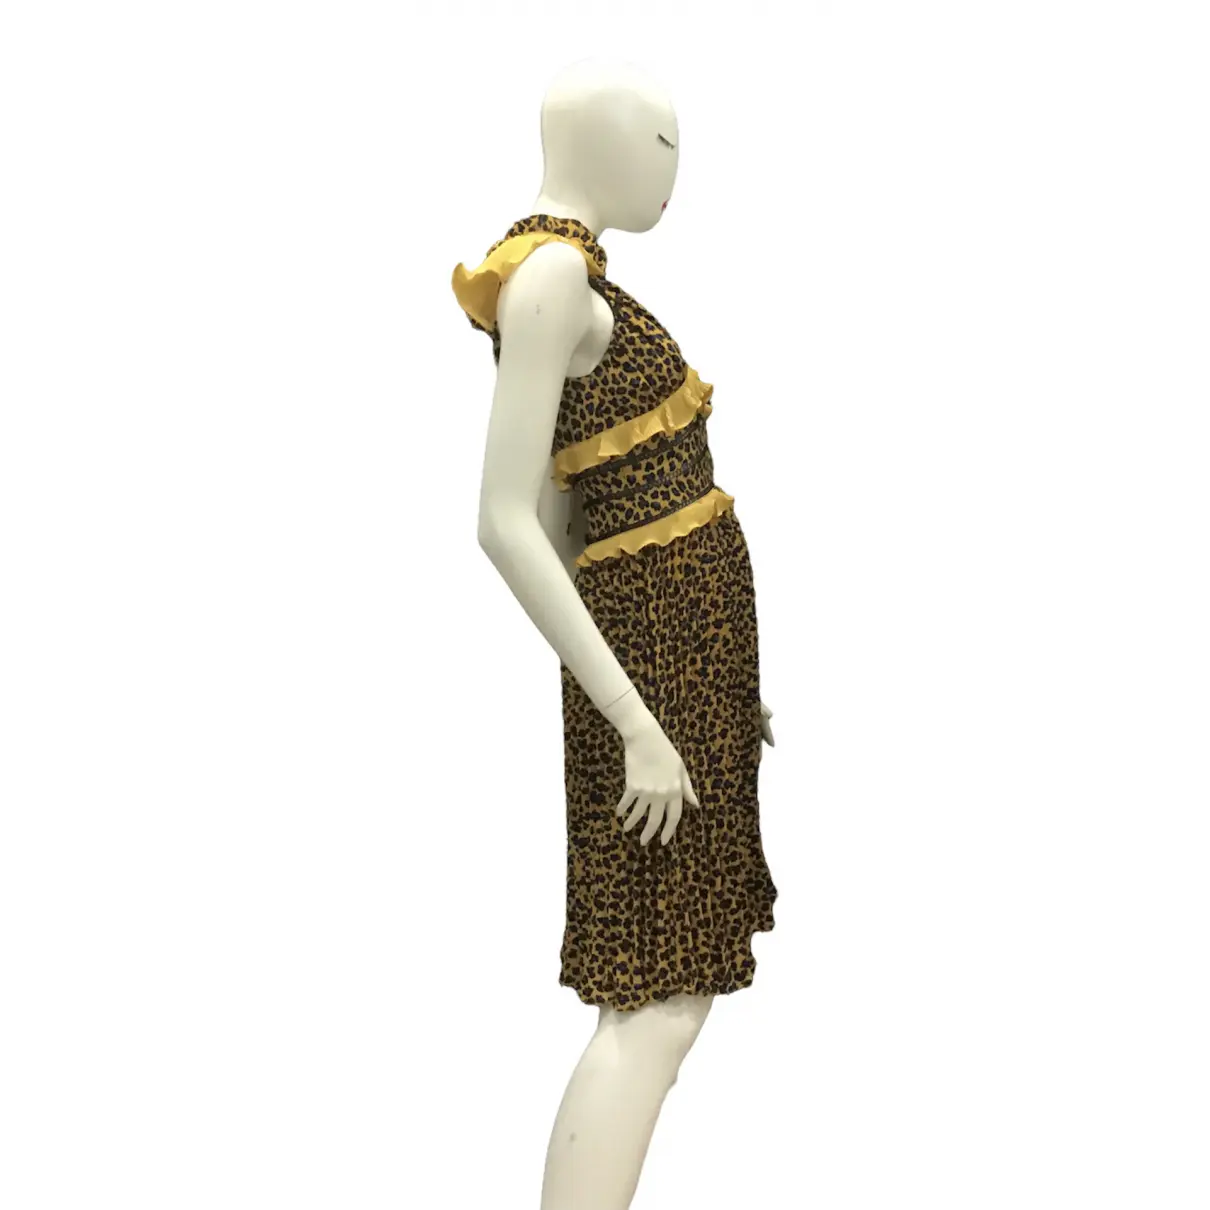 Buy Koralline Mid-length dress online